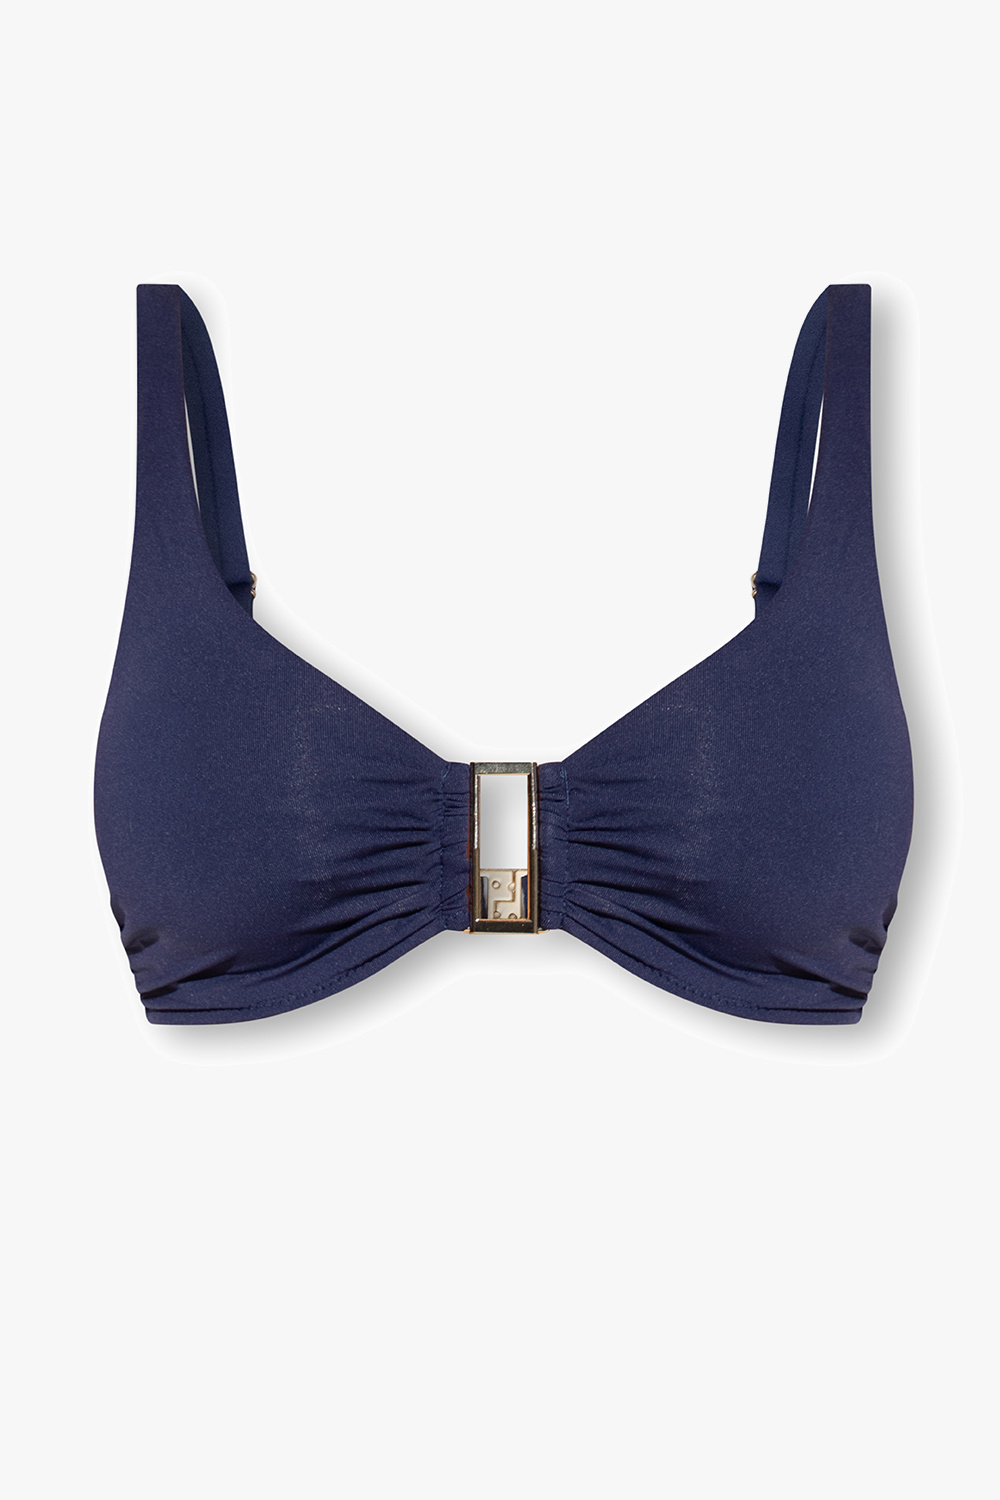 Melissa Odabash ‘Bel Air’ bikini top | Women's Clothing | Vitkac